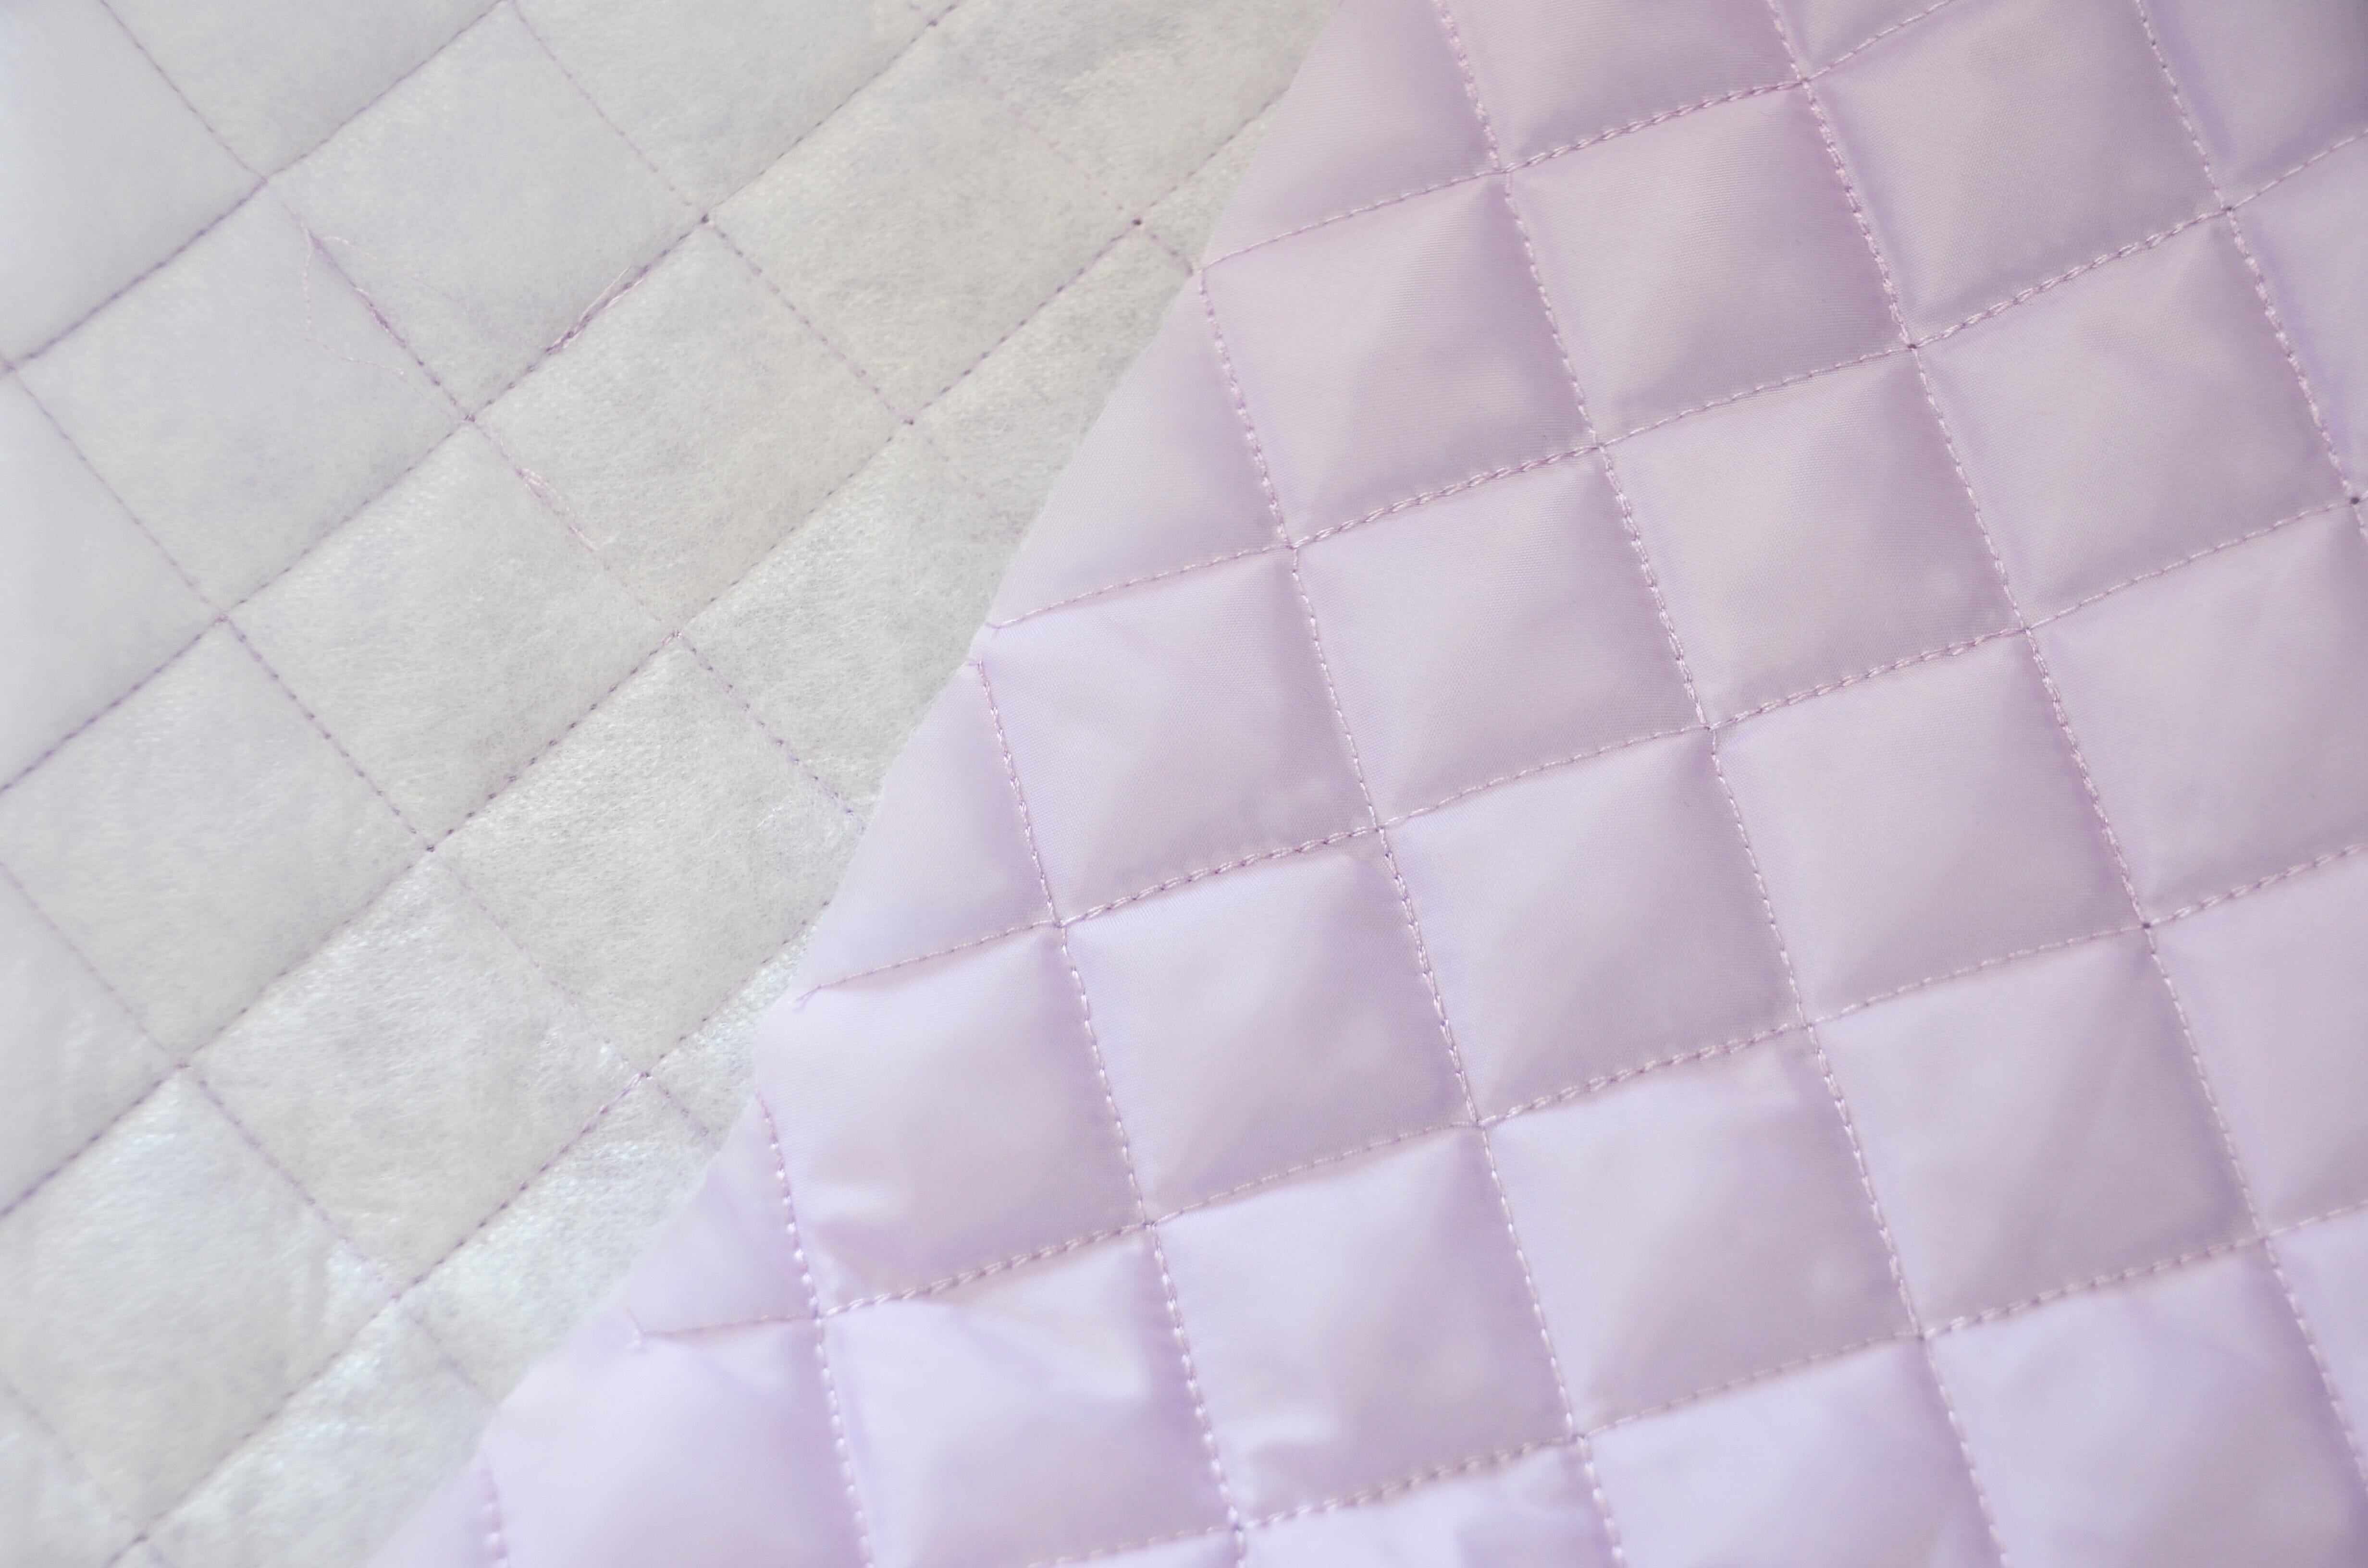 Blush Pink Lining Fabric -  Canada